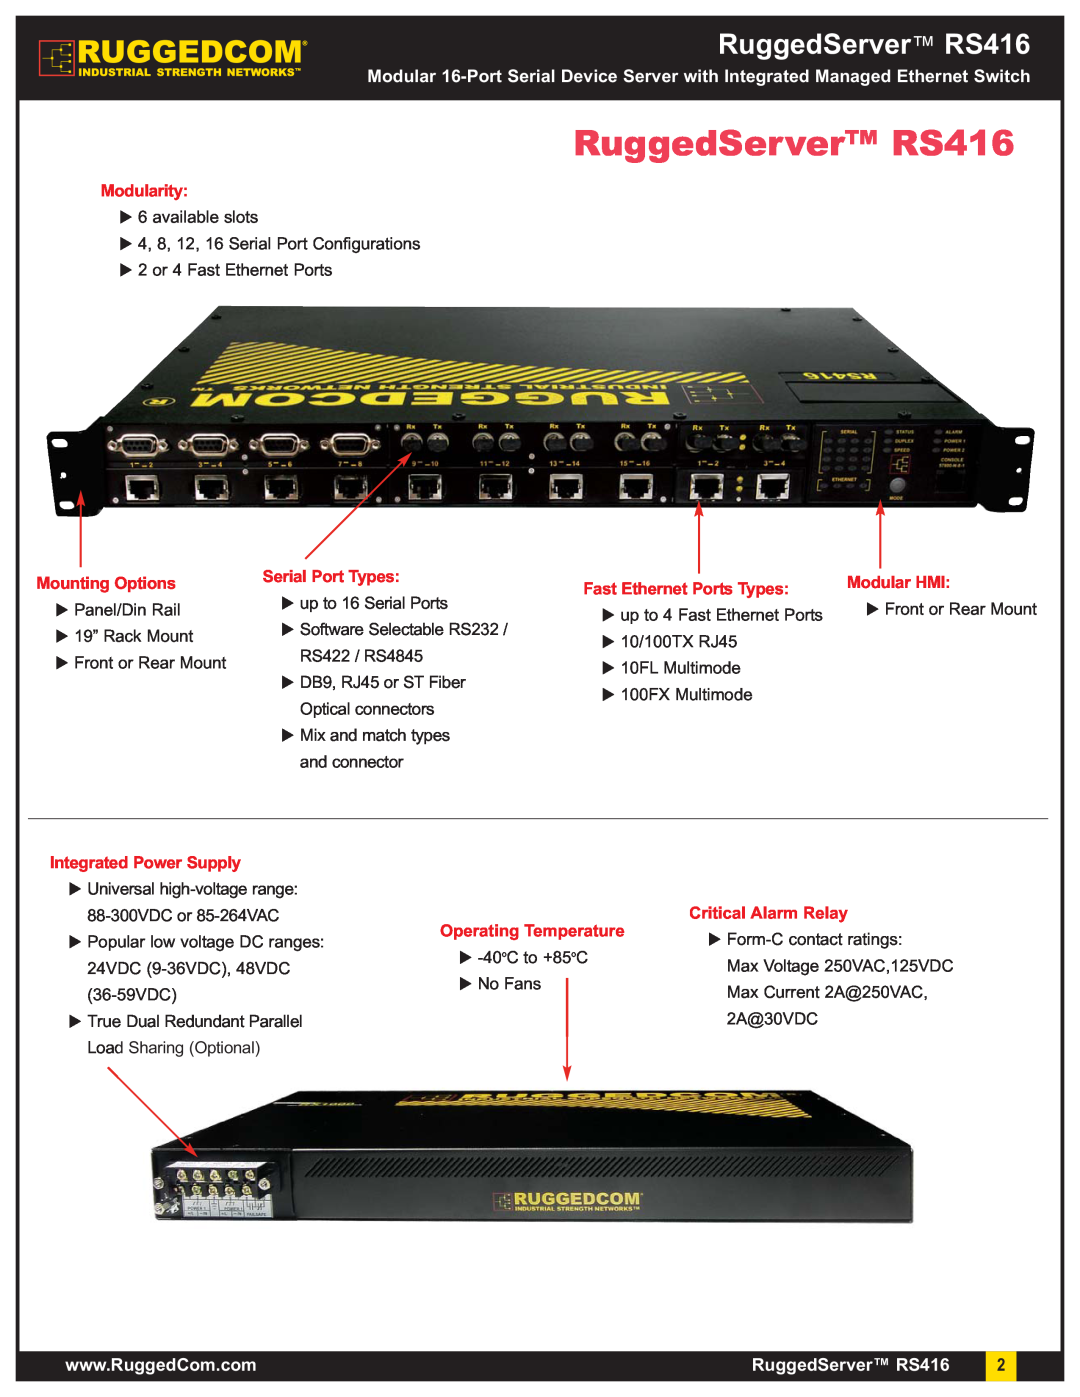 RuggedCom RuggedServer RS416, Modularity, Mounting Options, Serial Port Types, Fast Ethernet Ports Types, Modular HMI 